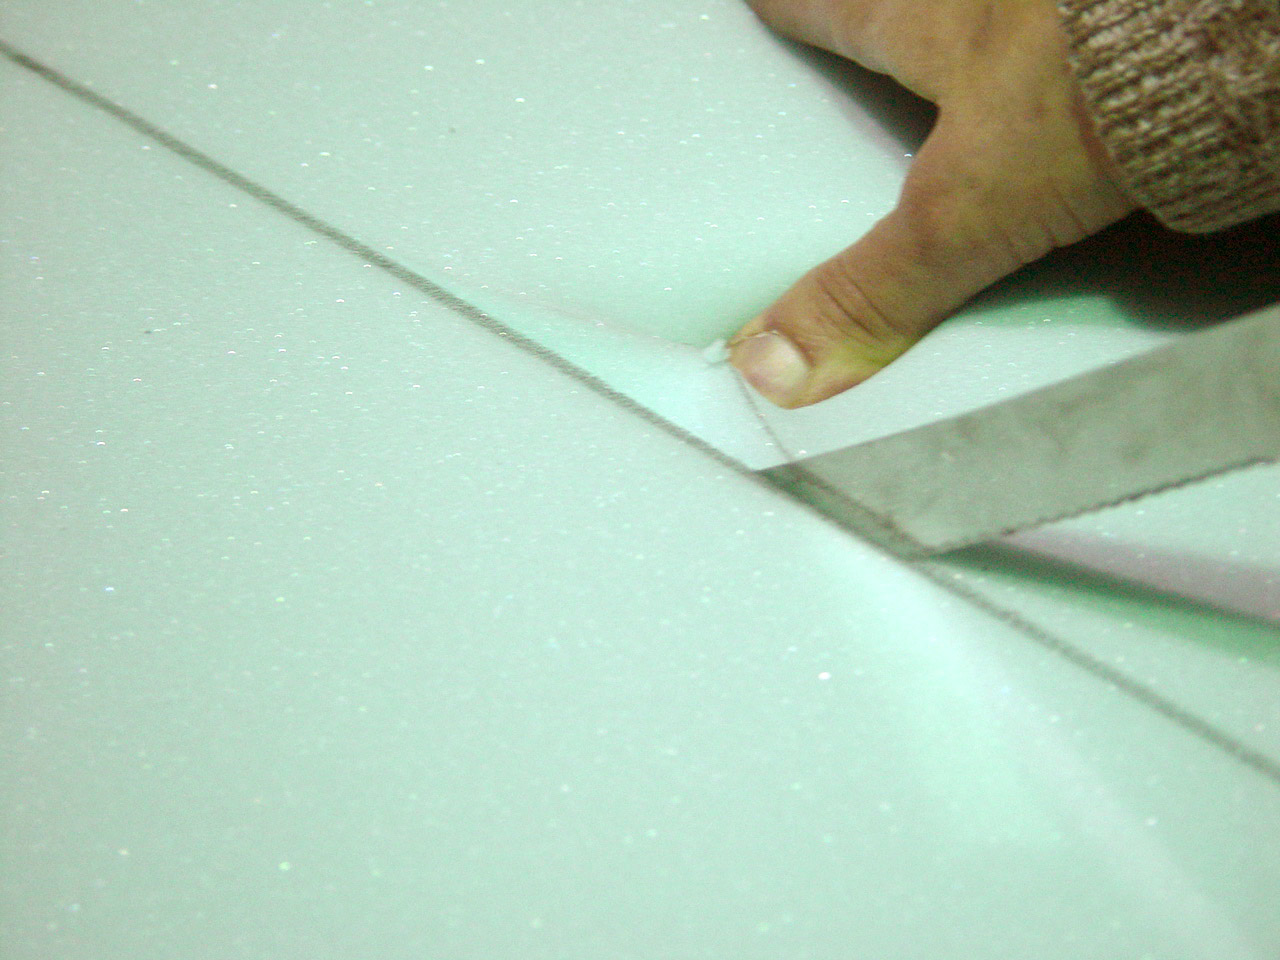 Cutting Cushion Foam using Electric Kitchen Knife 